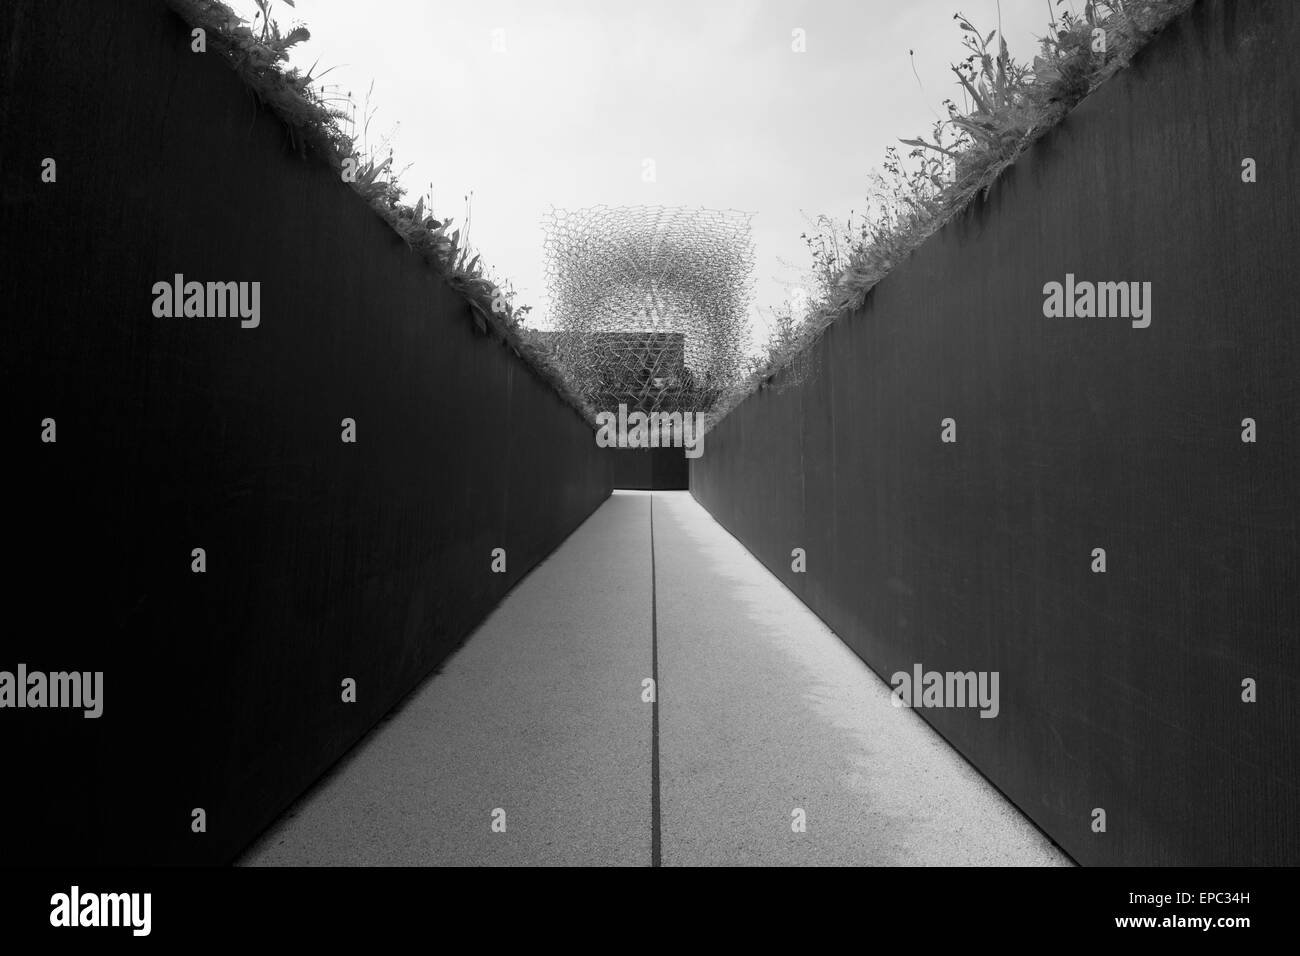 Mailand, Italien, 5. Mai 2015. Der britische Pavillon auf der Expo 2015. Wolfgang Buttress „The Hive“ Uk Expo Pavillon. Stockfoto